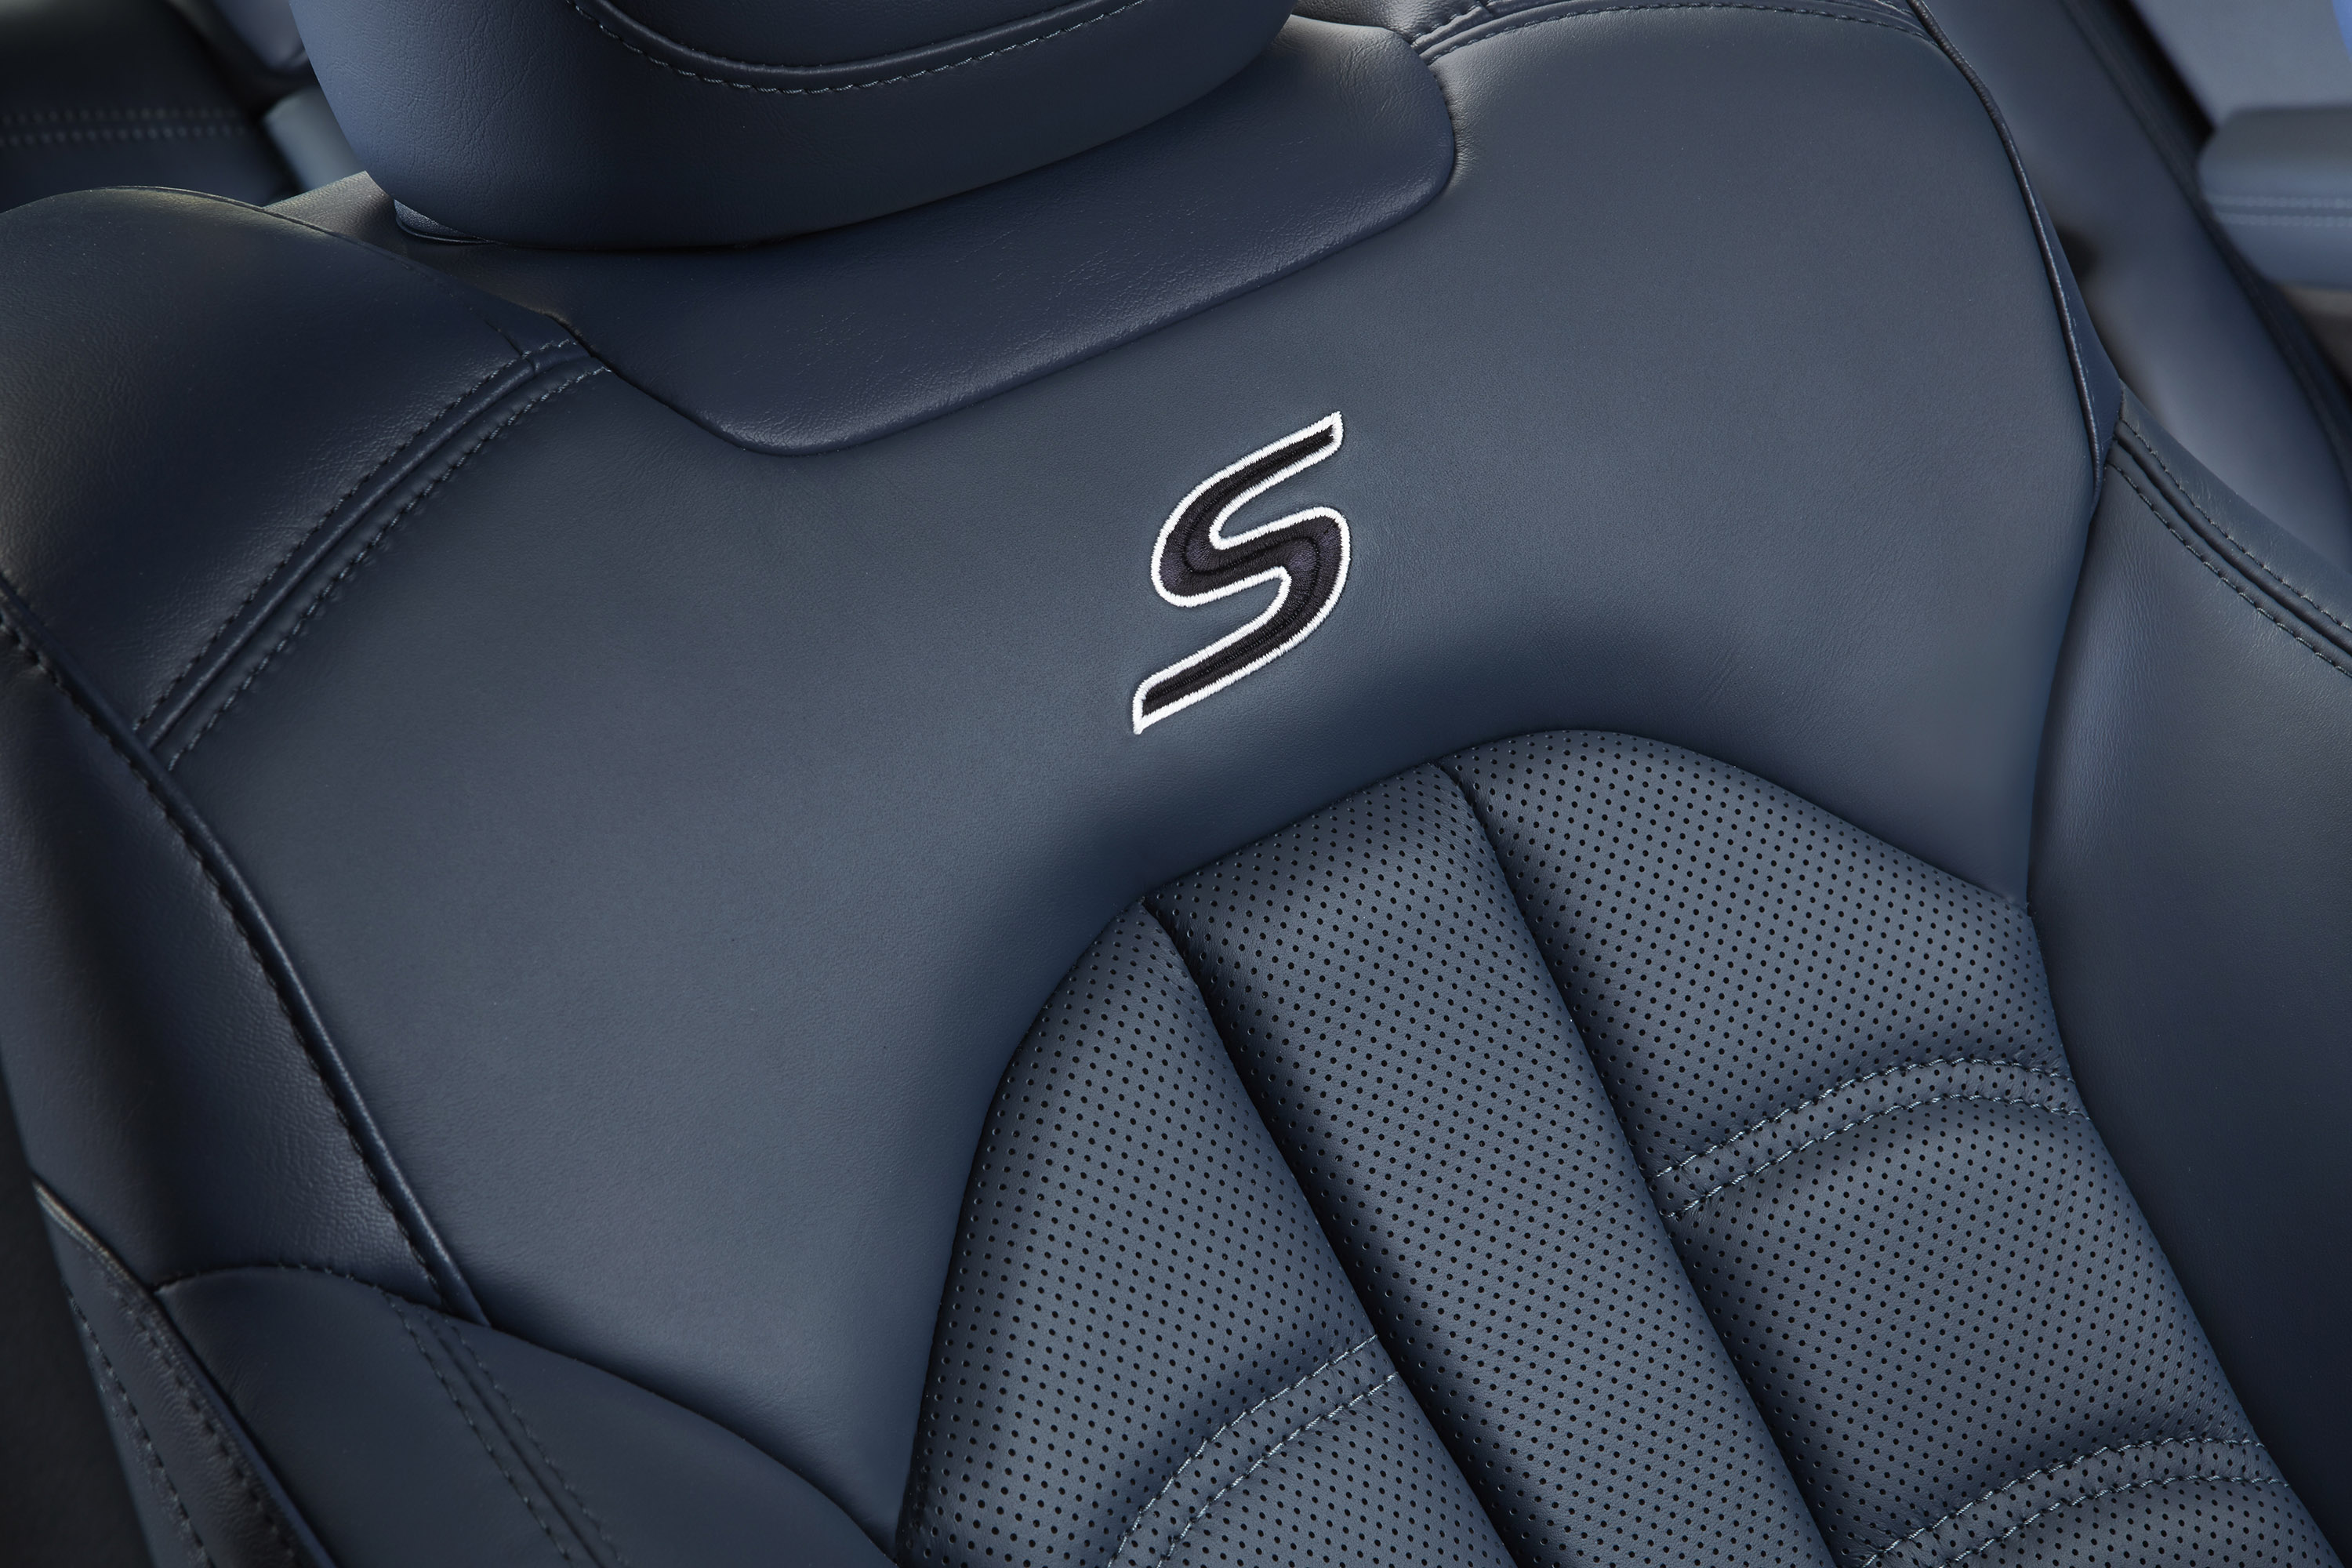 2015 Chrysler 200 Ambassador Blue Leather Interior Picture